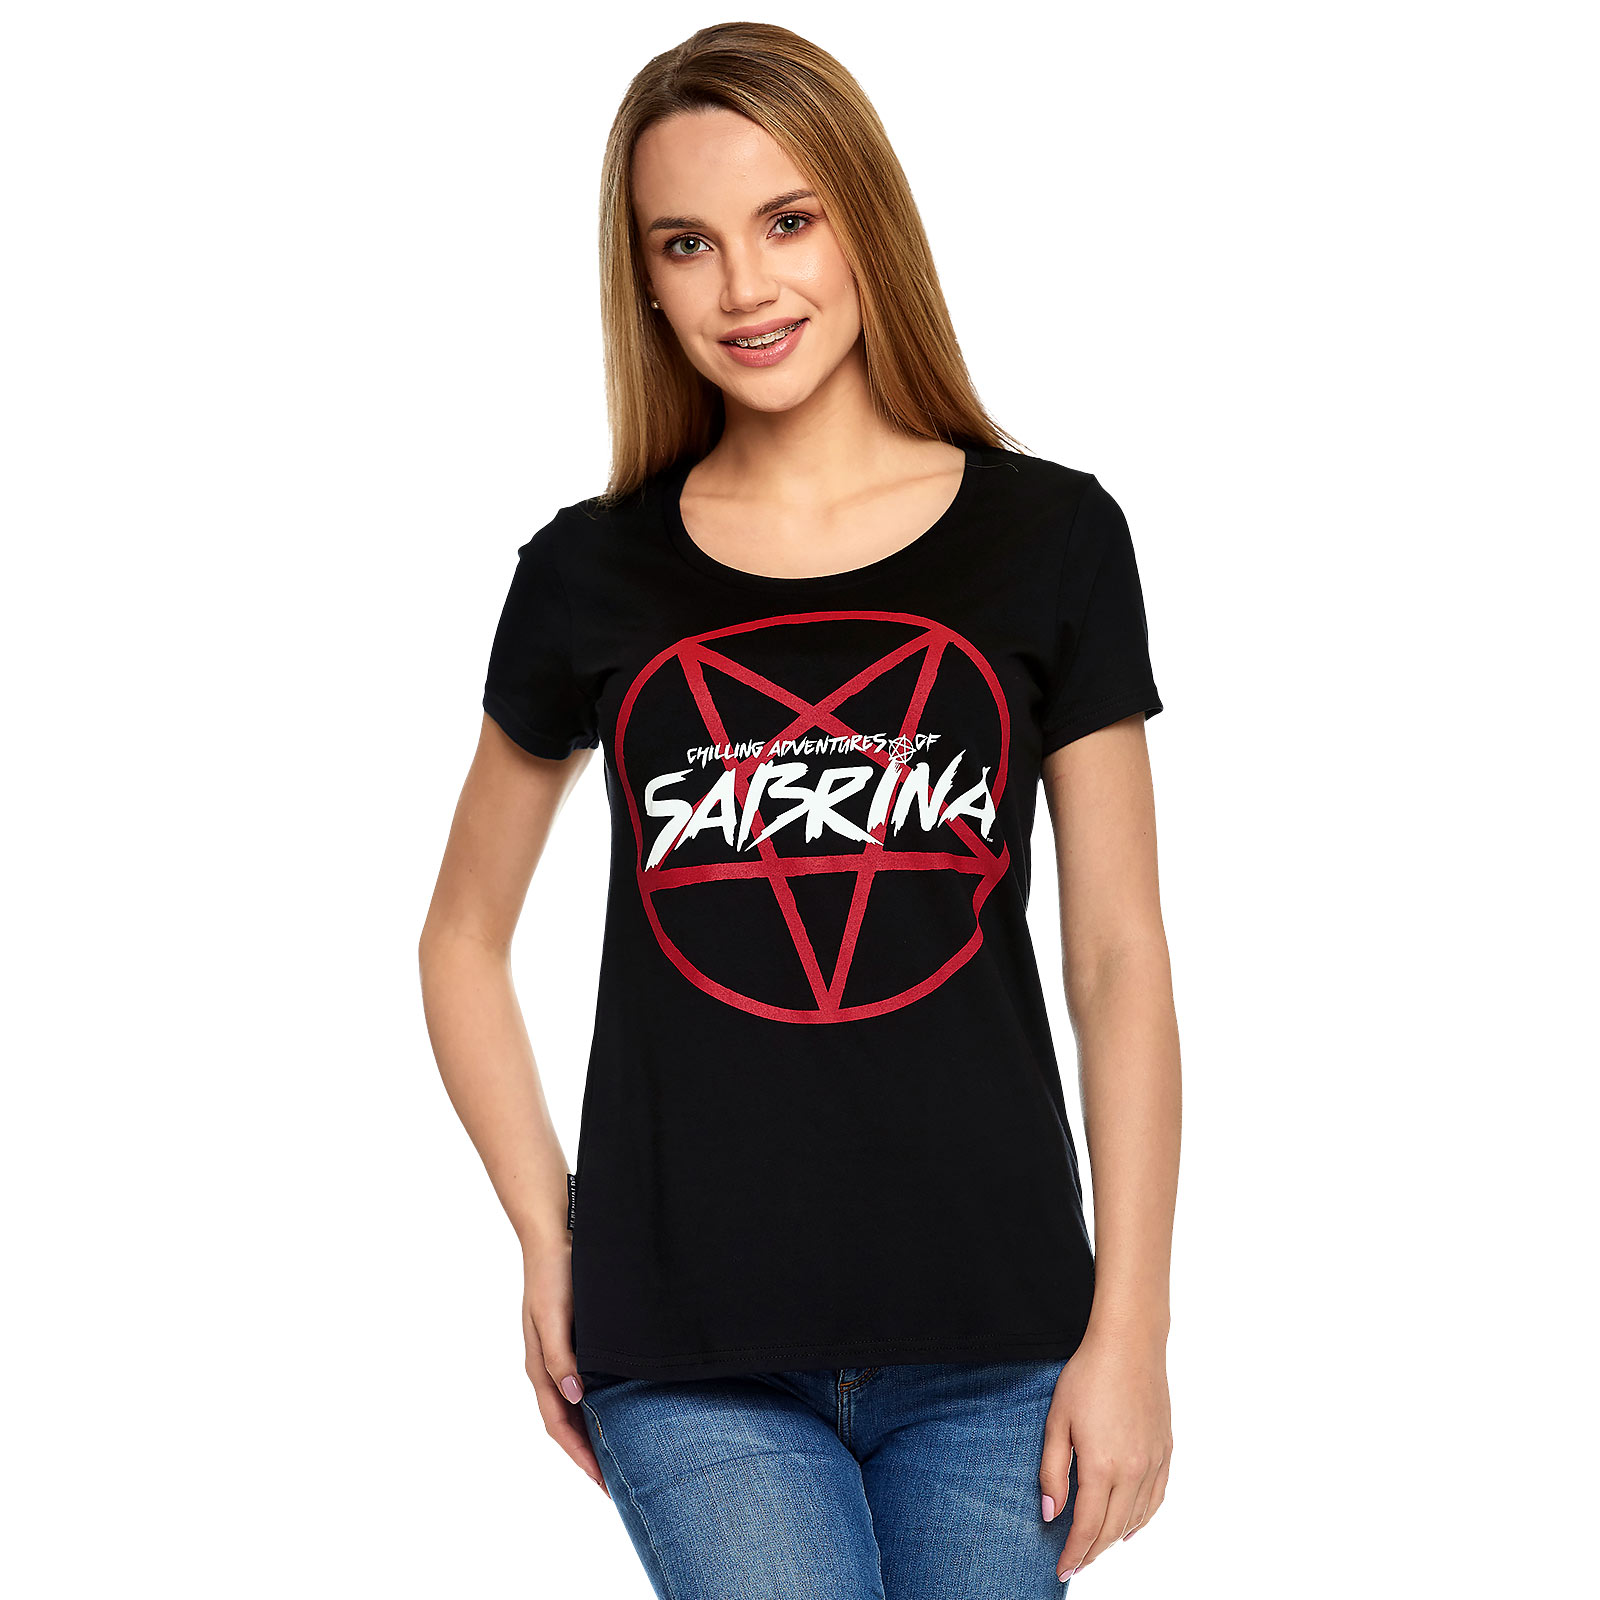 Chilling Adventures of Sabrina - Logo T-Shirt Damen schwarz